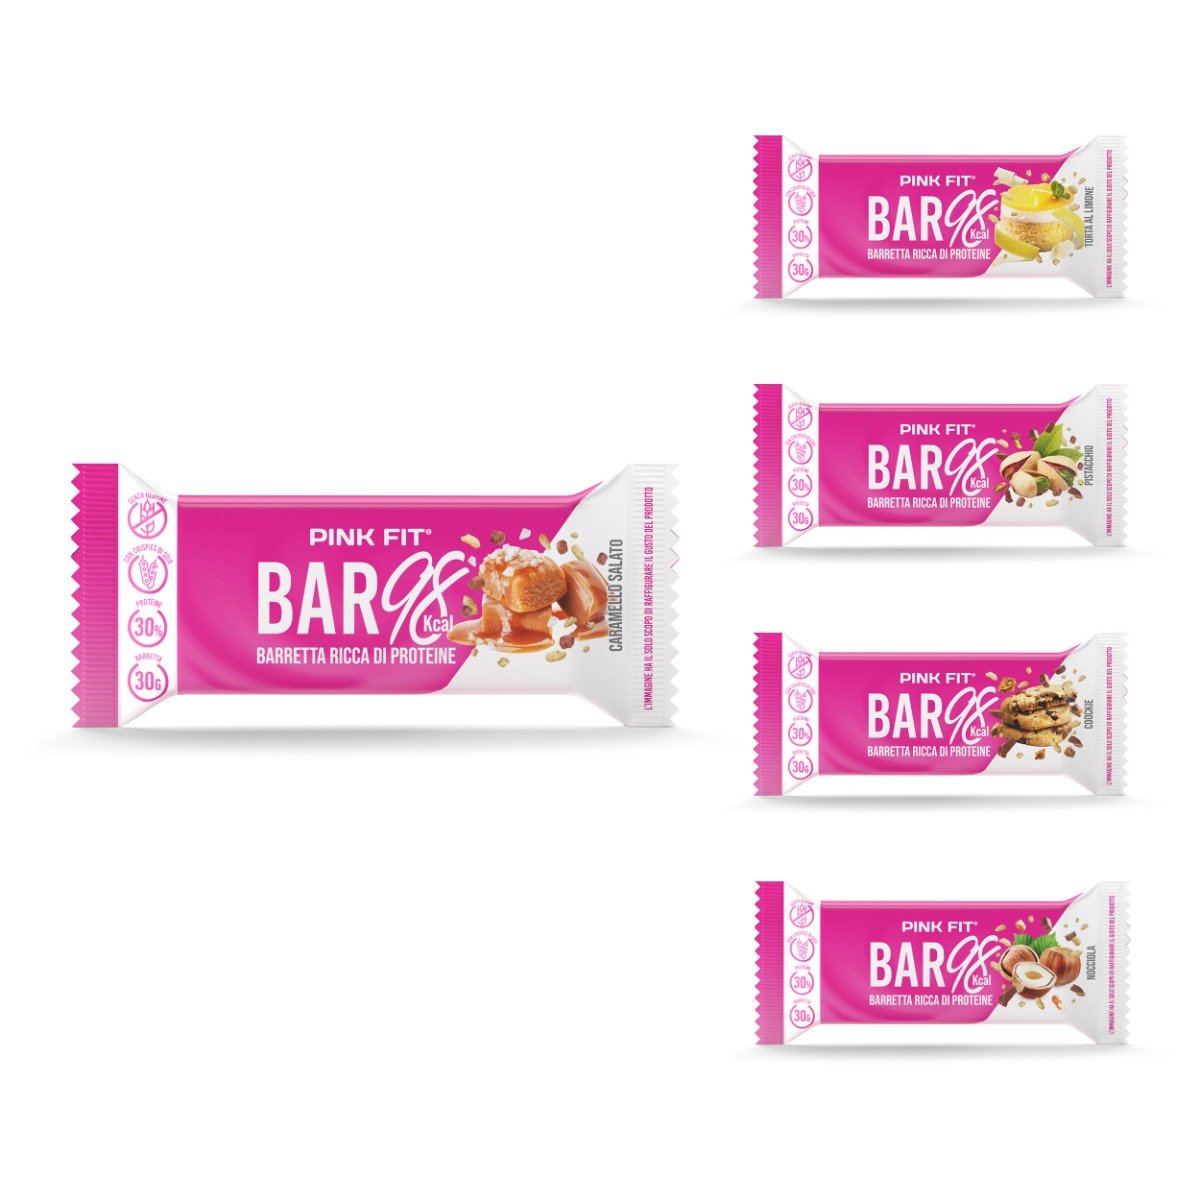 Pink Fit Bar 98 kcal